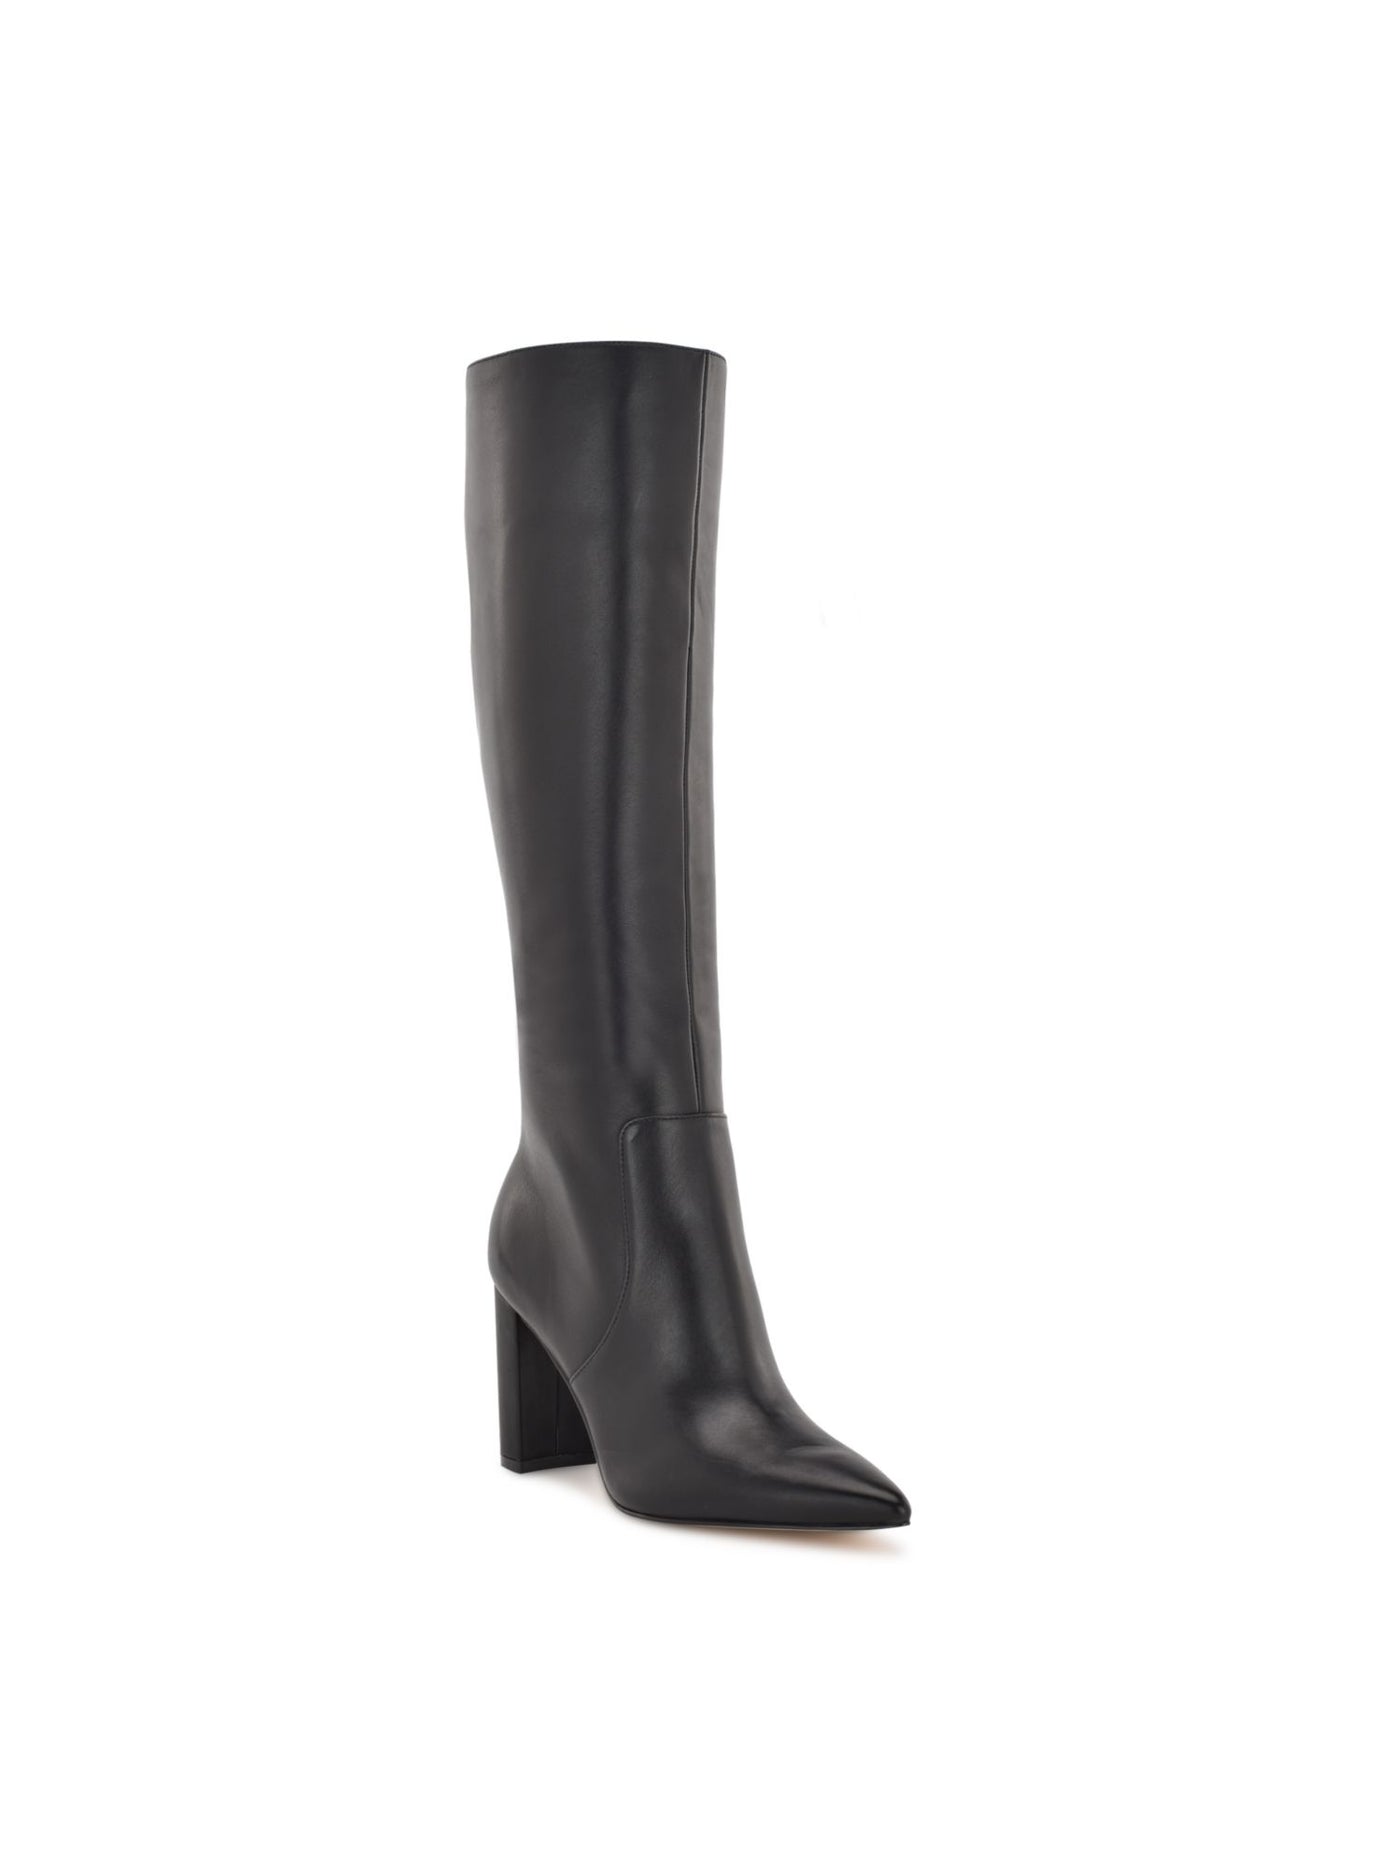 NINE WEST Womens Black Goring Padded Danee Pointed Toe Block Heel Zip-Up Leather Dress Boots 9 M